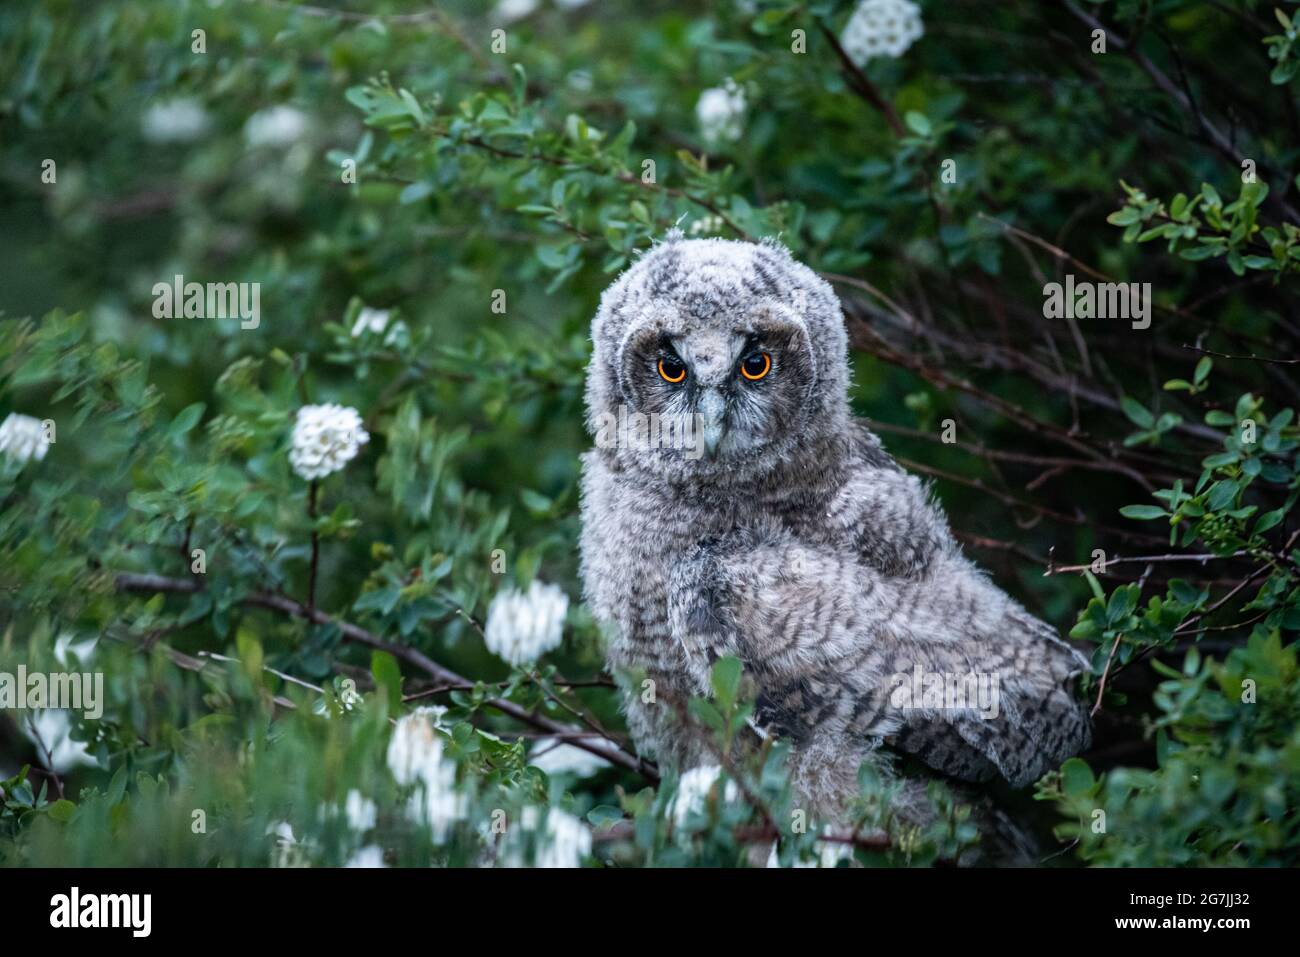 Long-eared owl baby in a bush Stock Photo